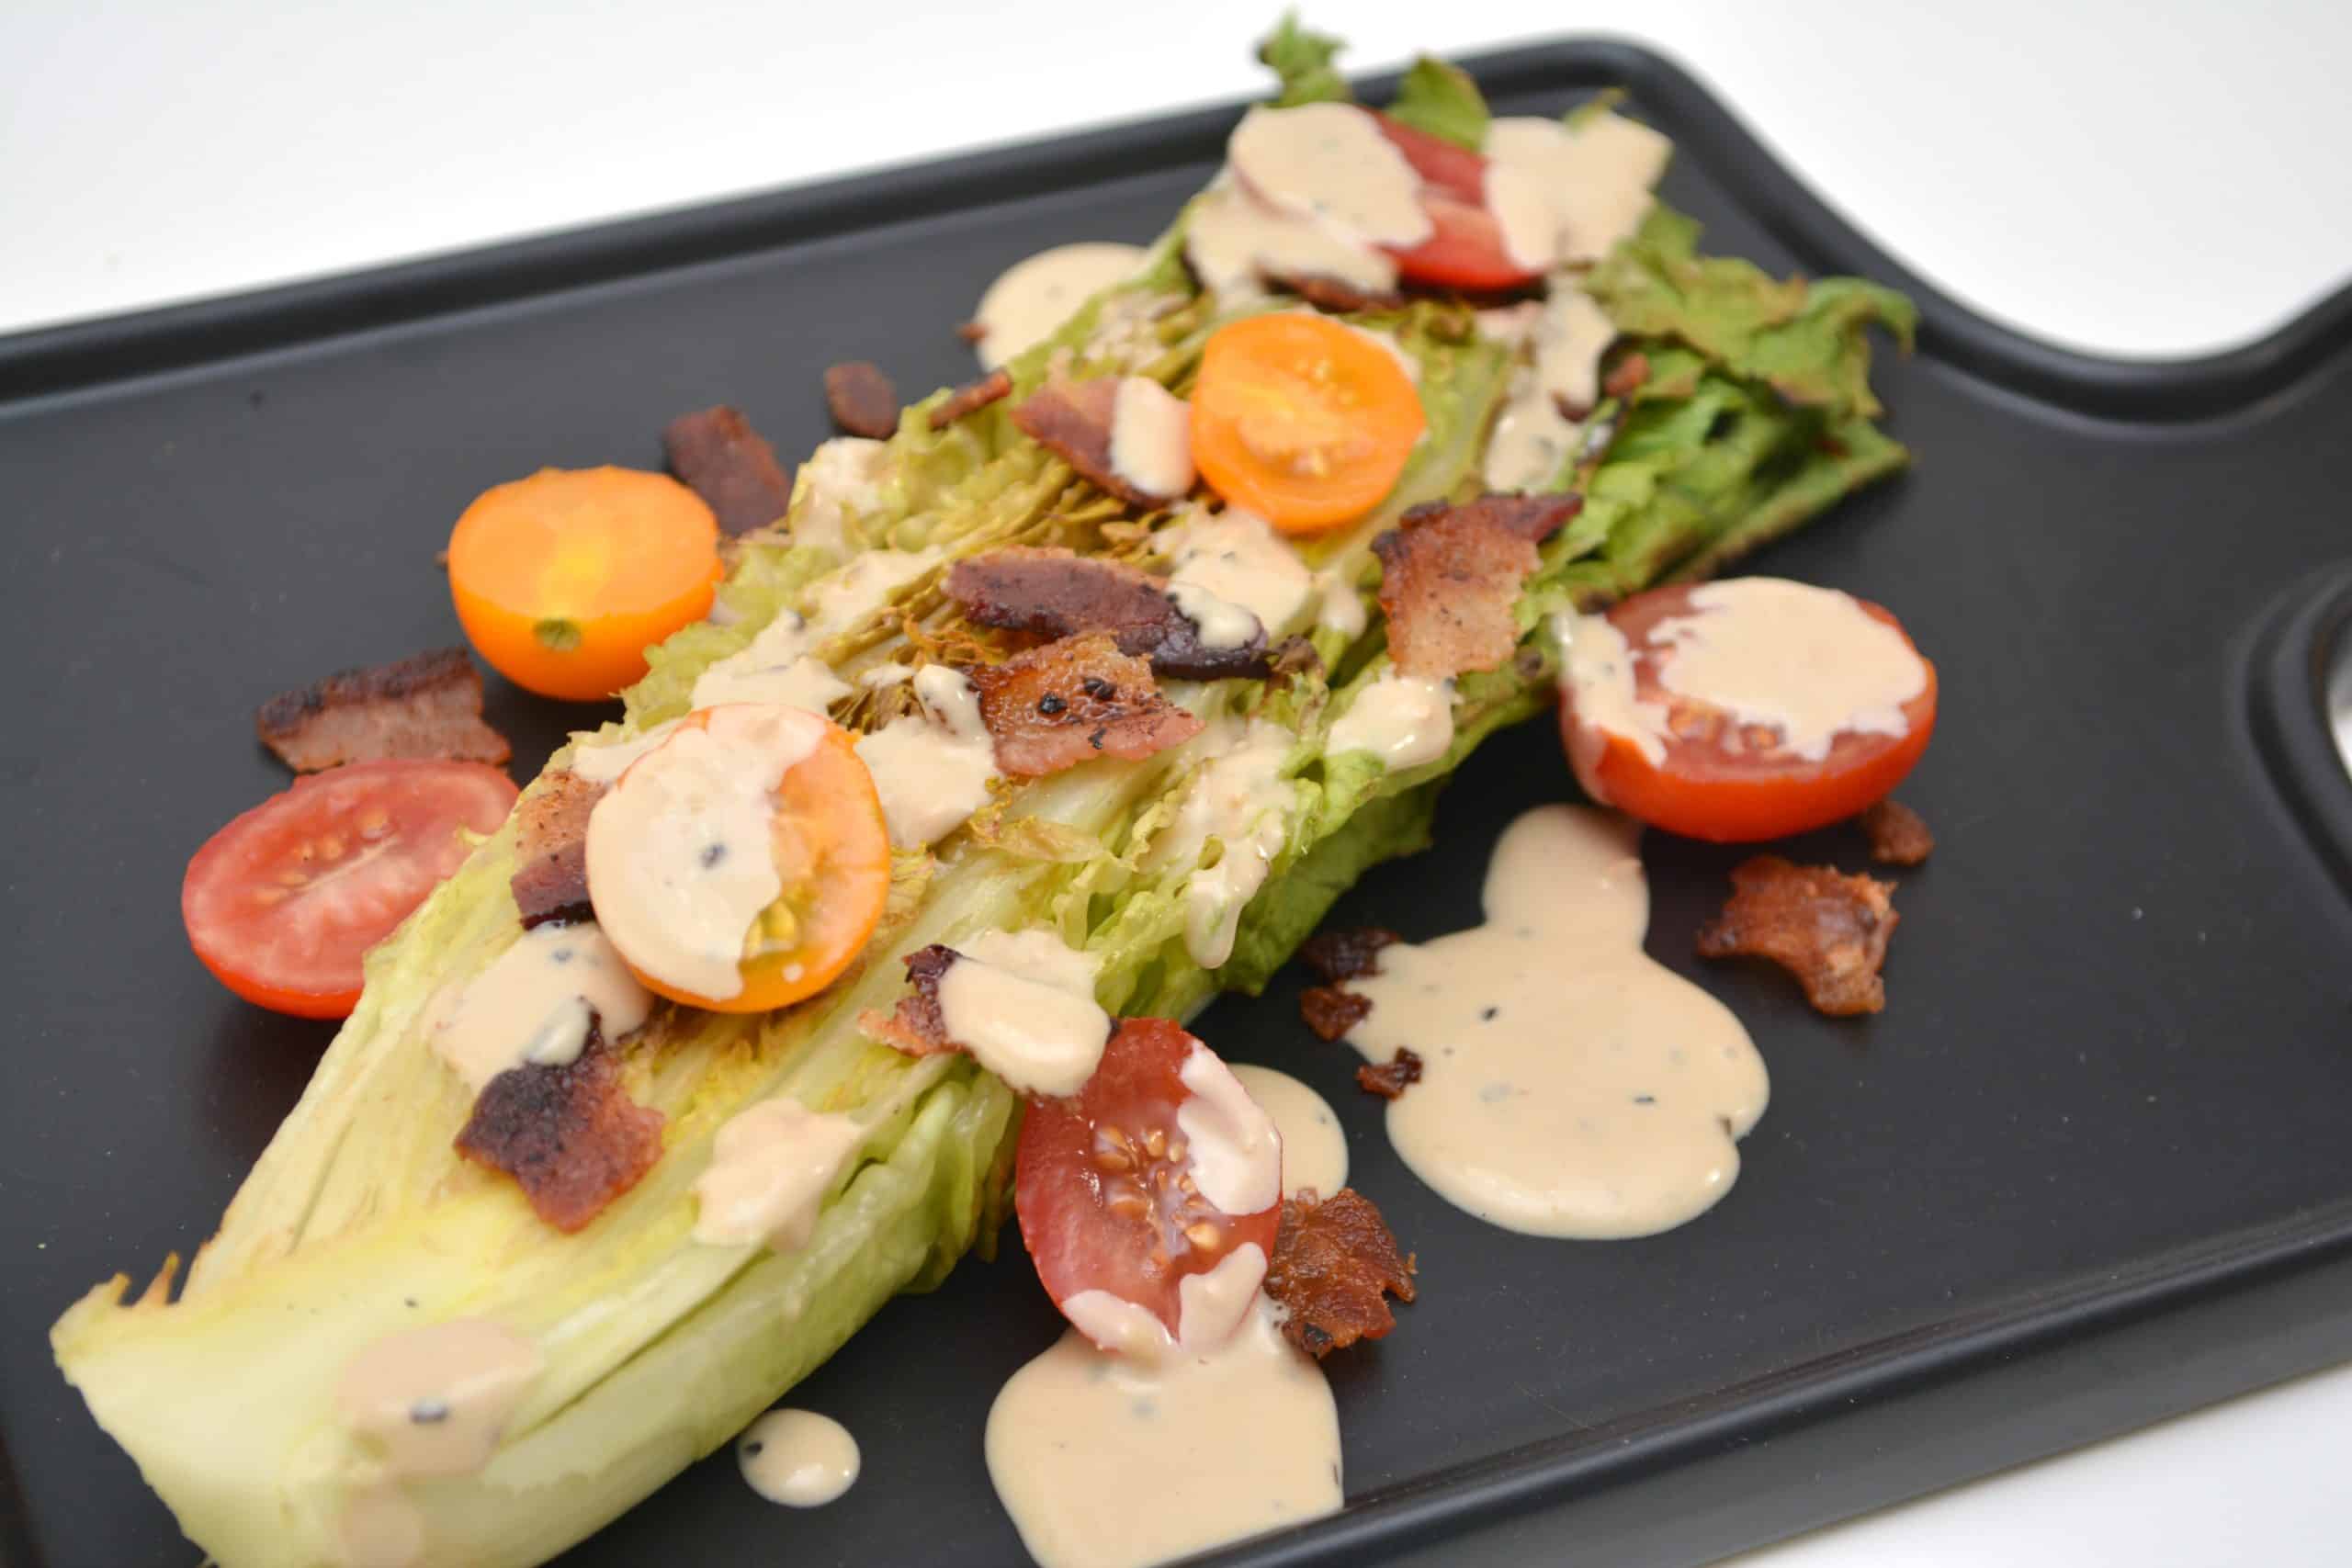 Grilled Caesar salad